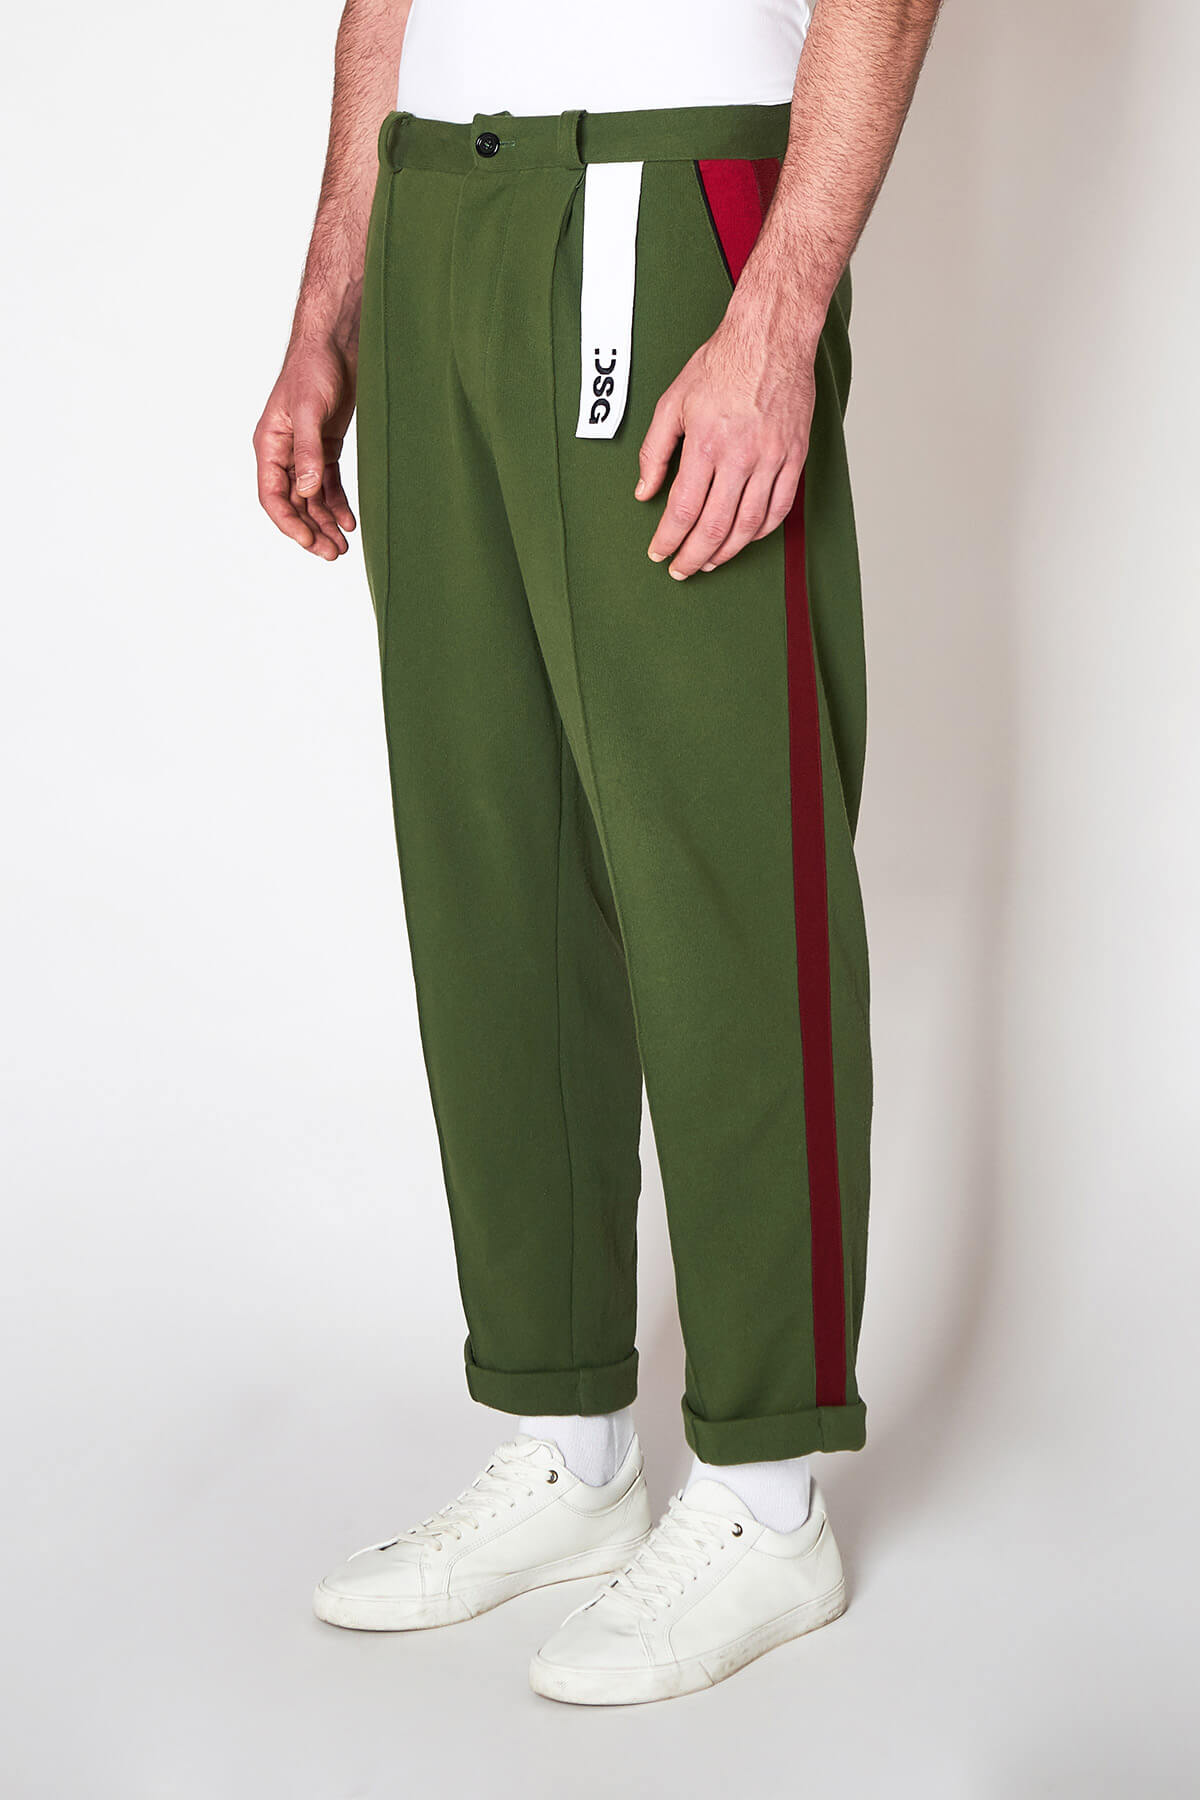 DSG Green Athletic Pants for Women